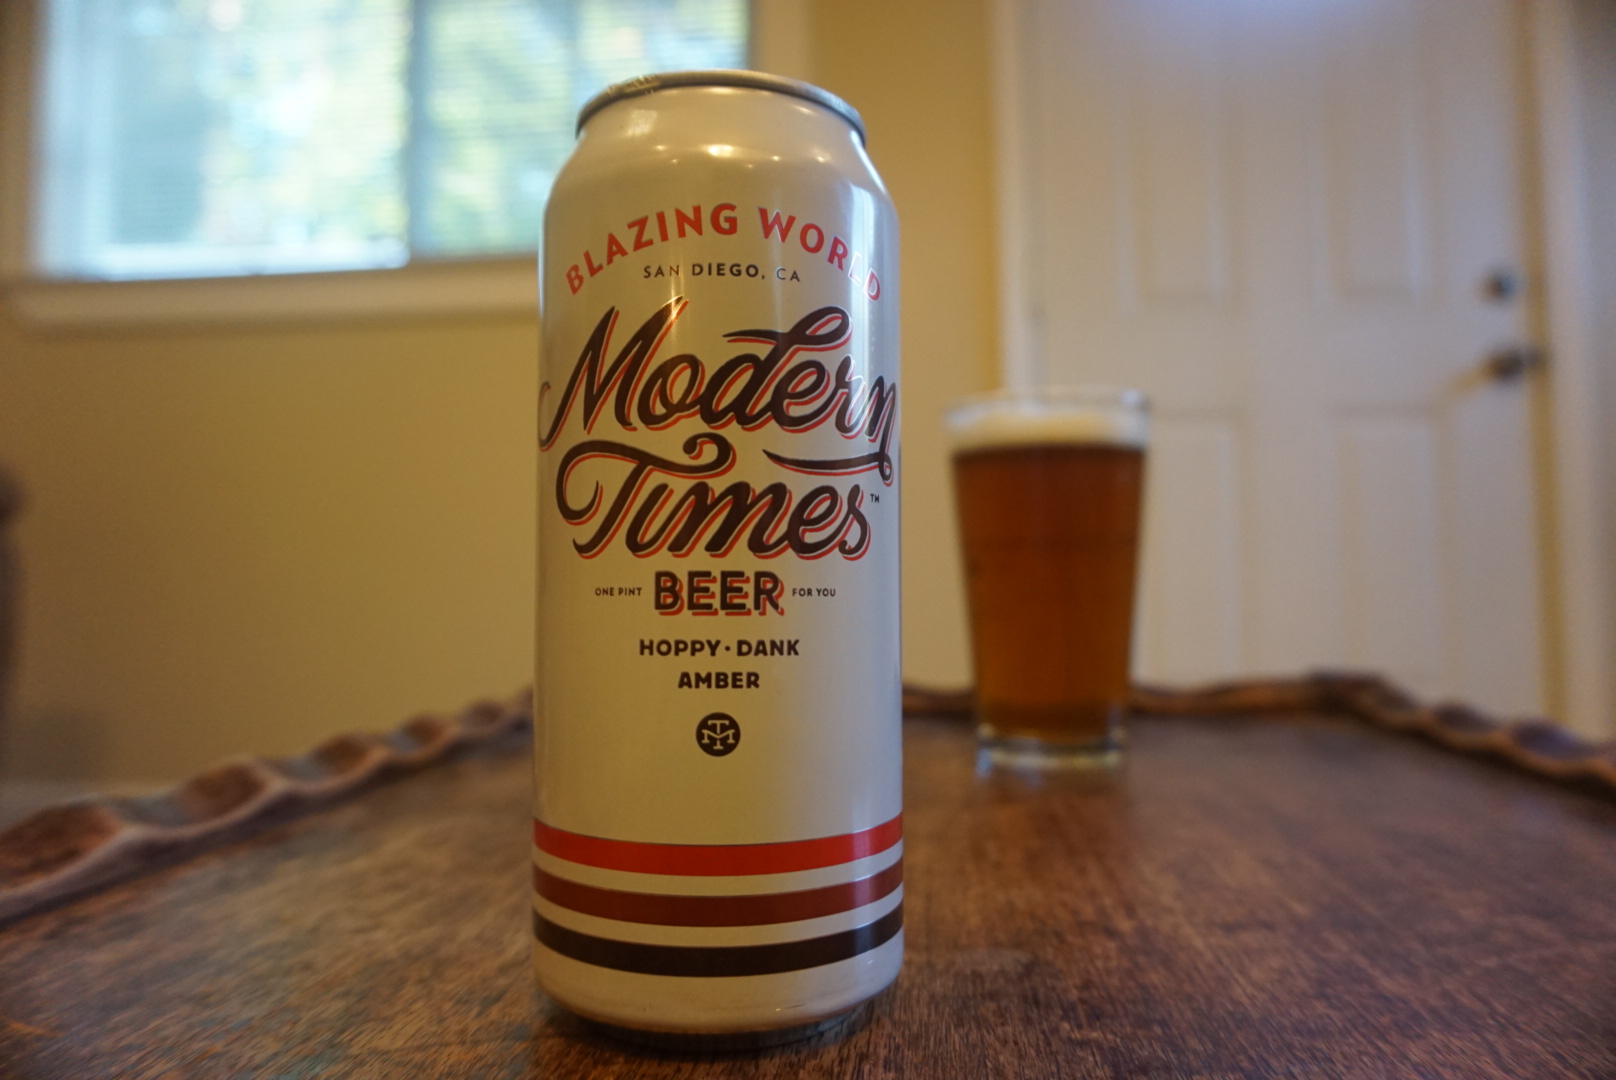 Modern Times Beer | Blazing World